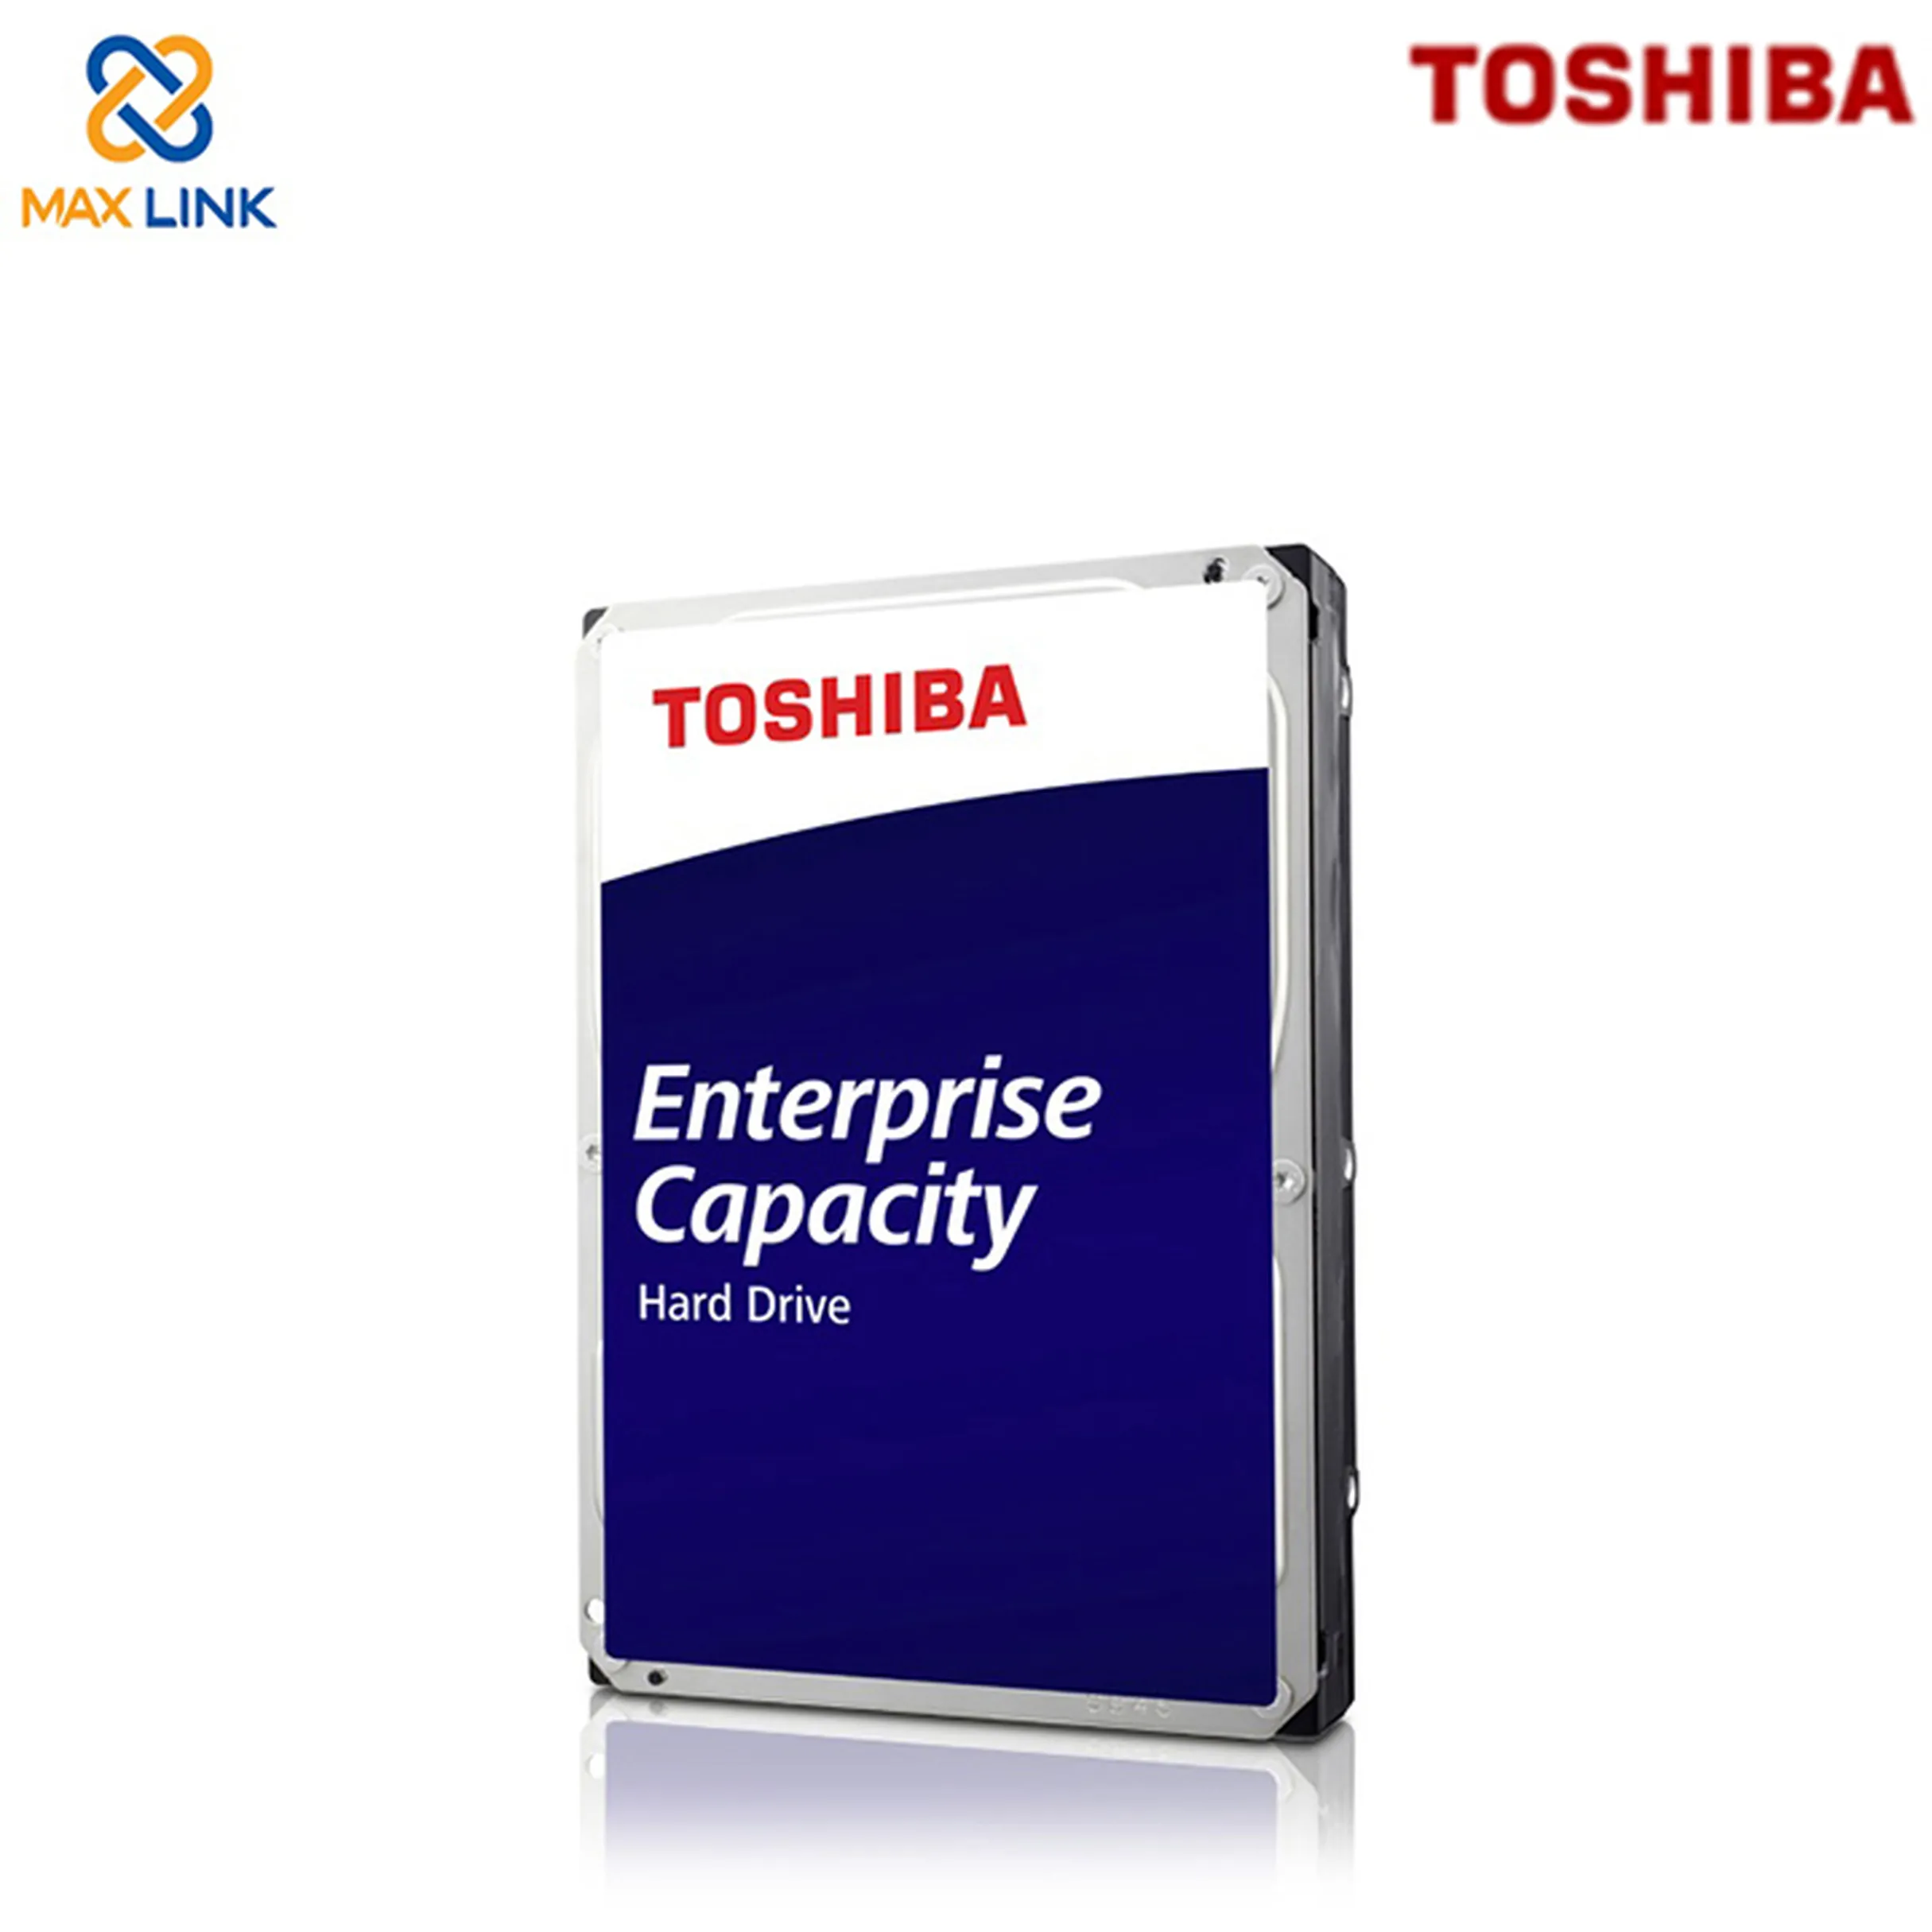 HDWG160UZSVA Toshiba N300 6TB 7200RPM SATA 6Gbps 256MB Cache (512e)  3.5-inch Internal Hard Drive